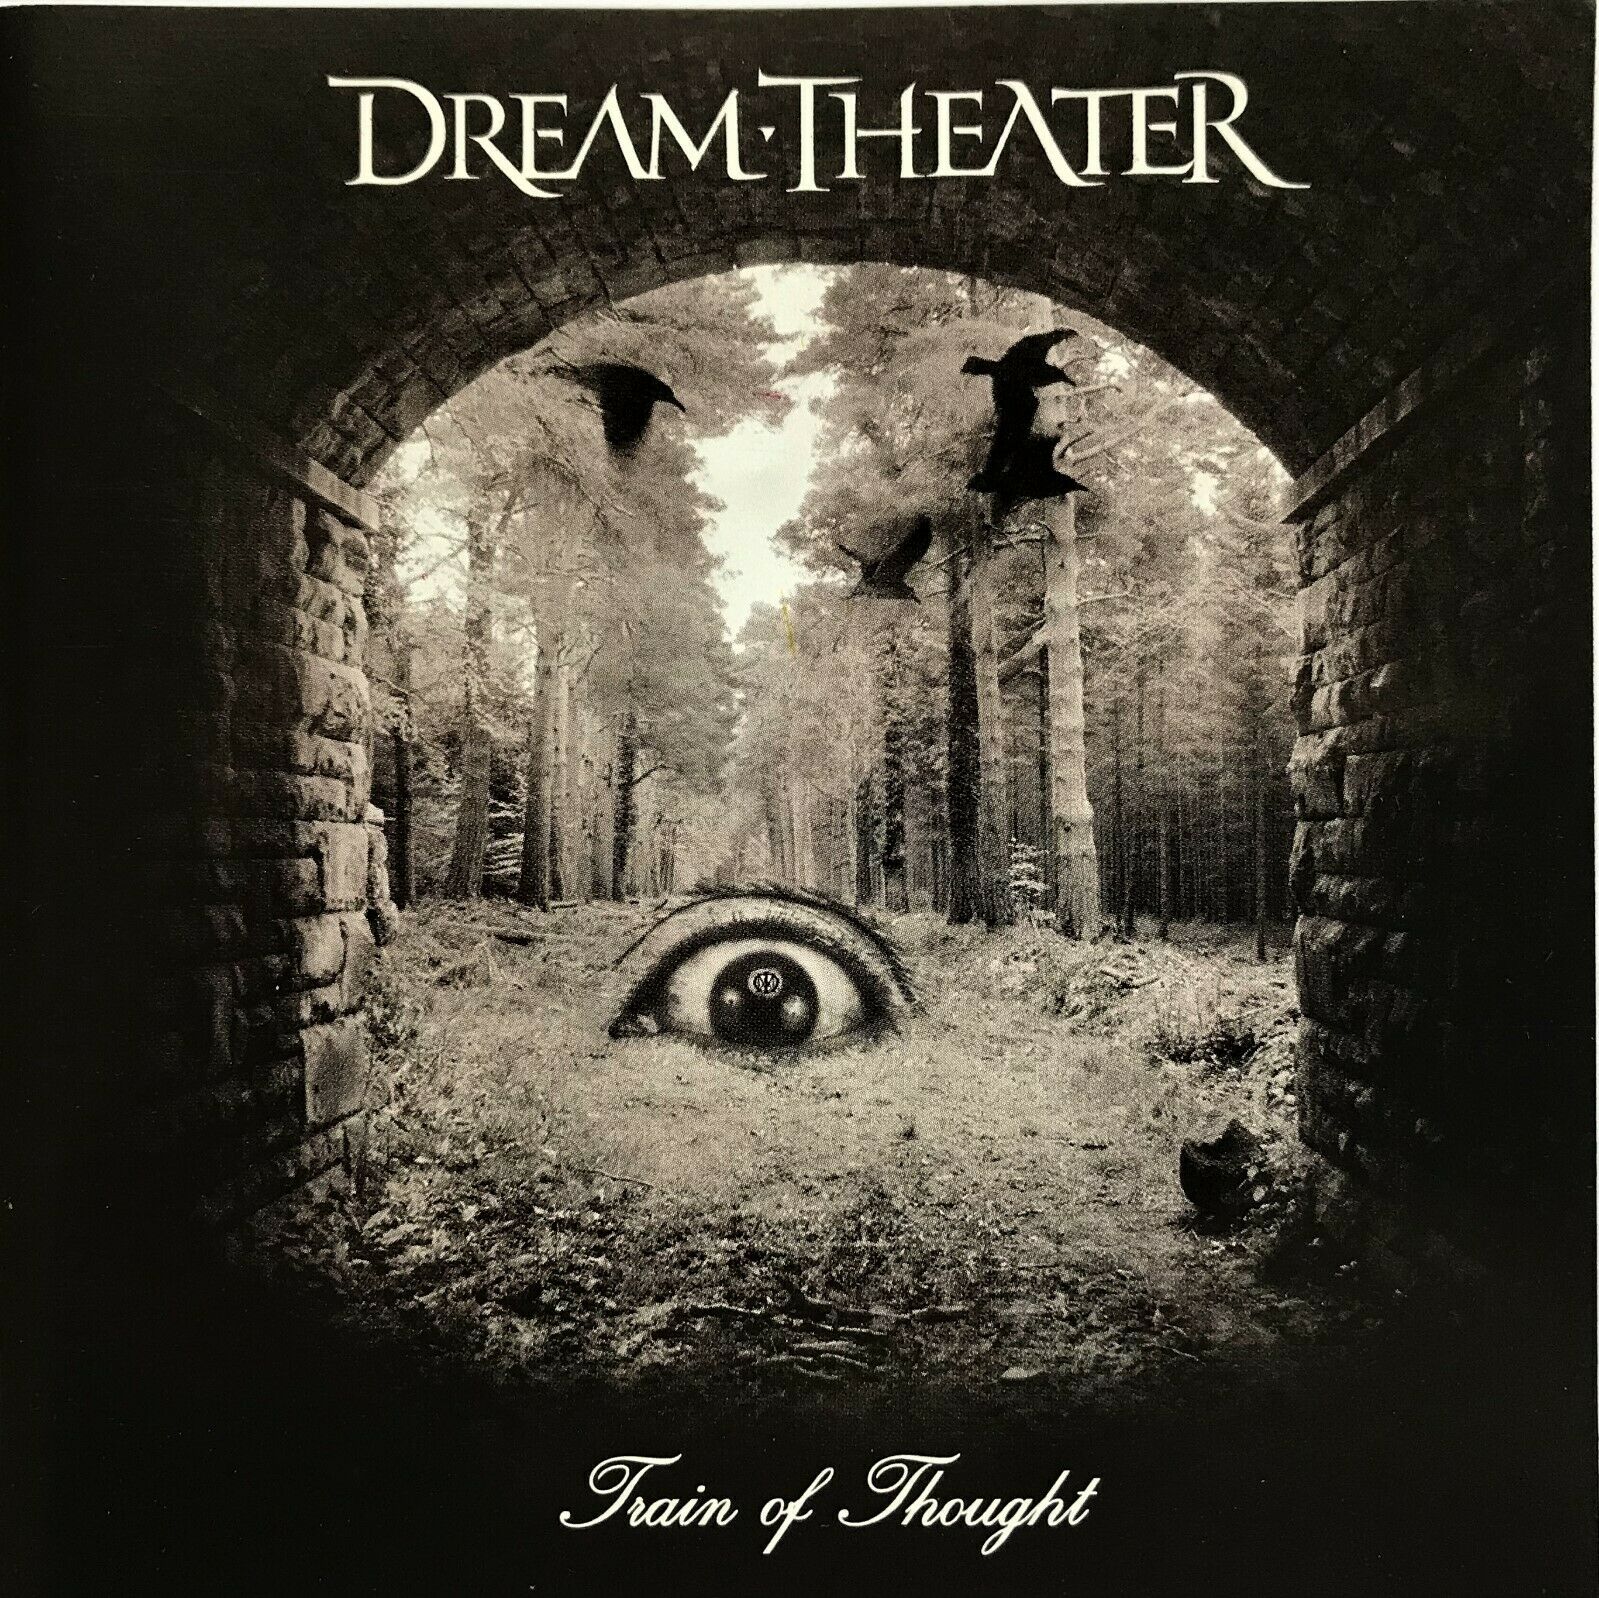 Альбом theatre dreams. Dream Theater - Train of thought (2003). Dream Theater обложка. Dream Theater 2021. Dream Theater Train of thought.